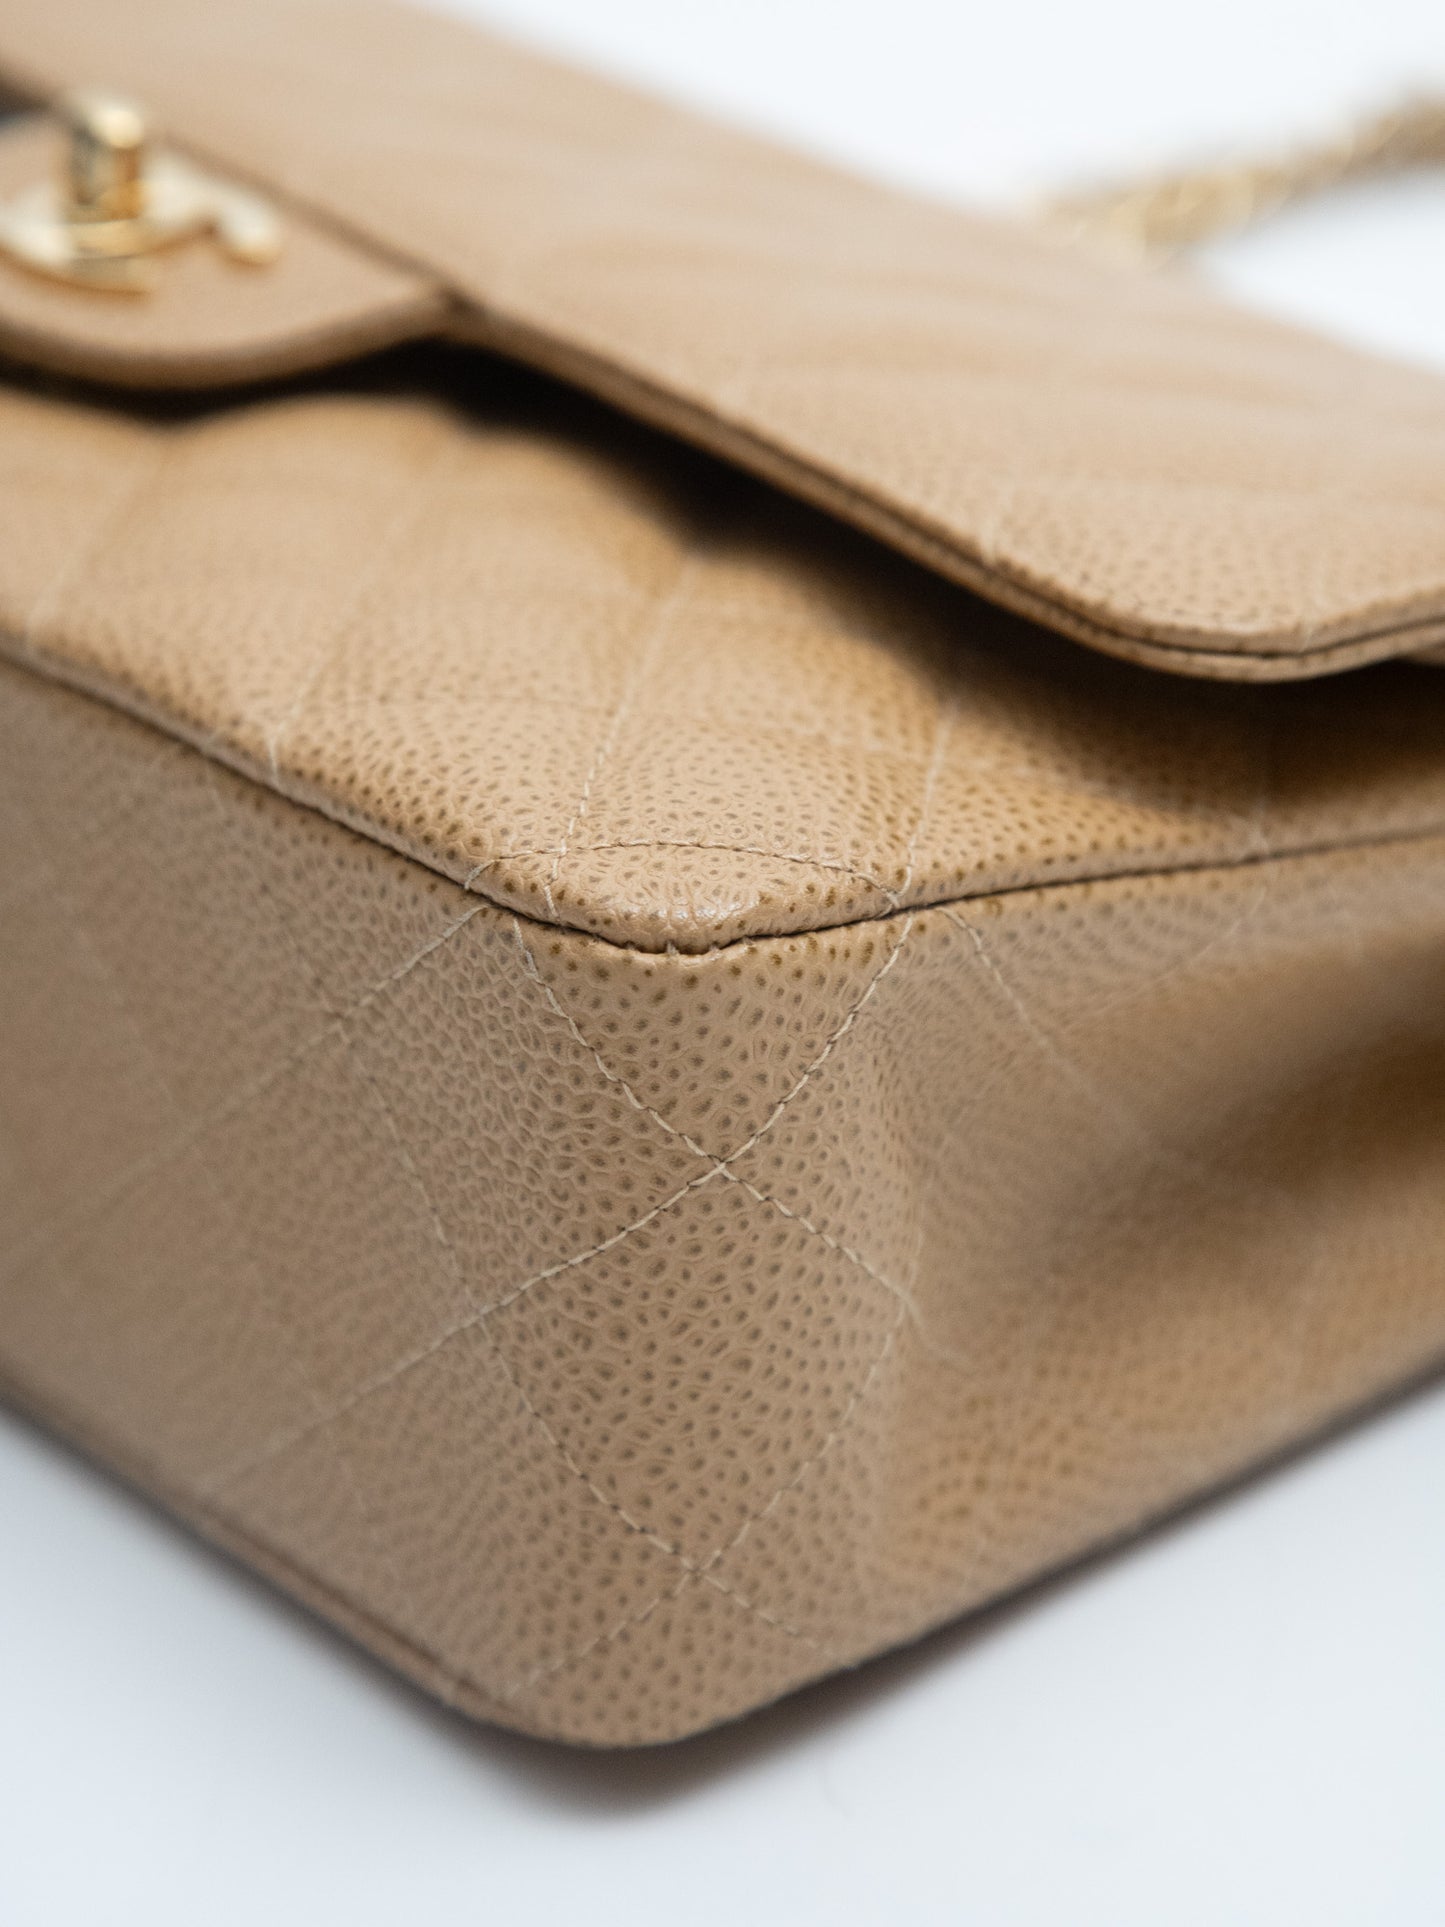 Chanel Classic Flap Shoulder Bag 25 Caviar Skin Beige